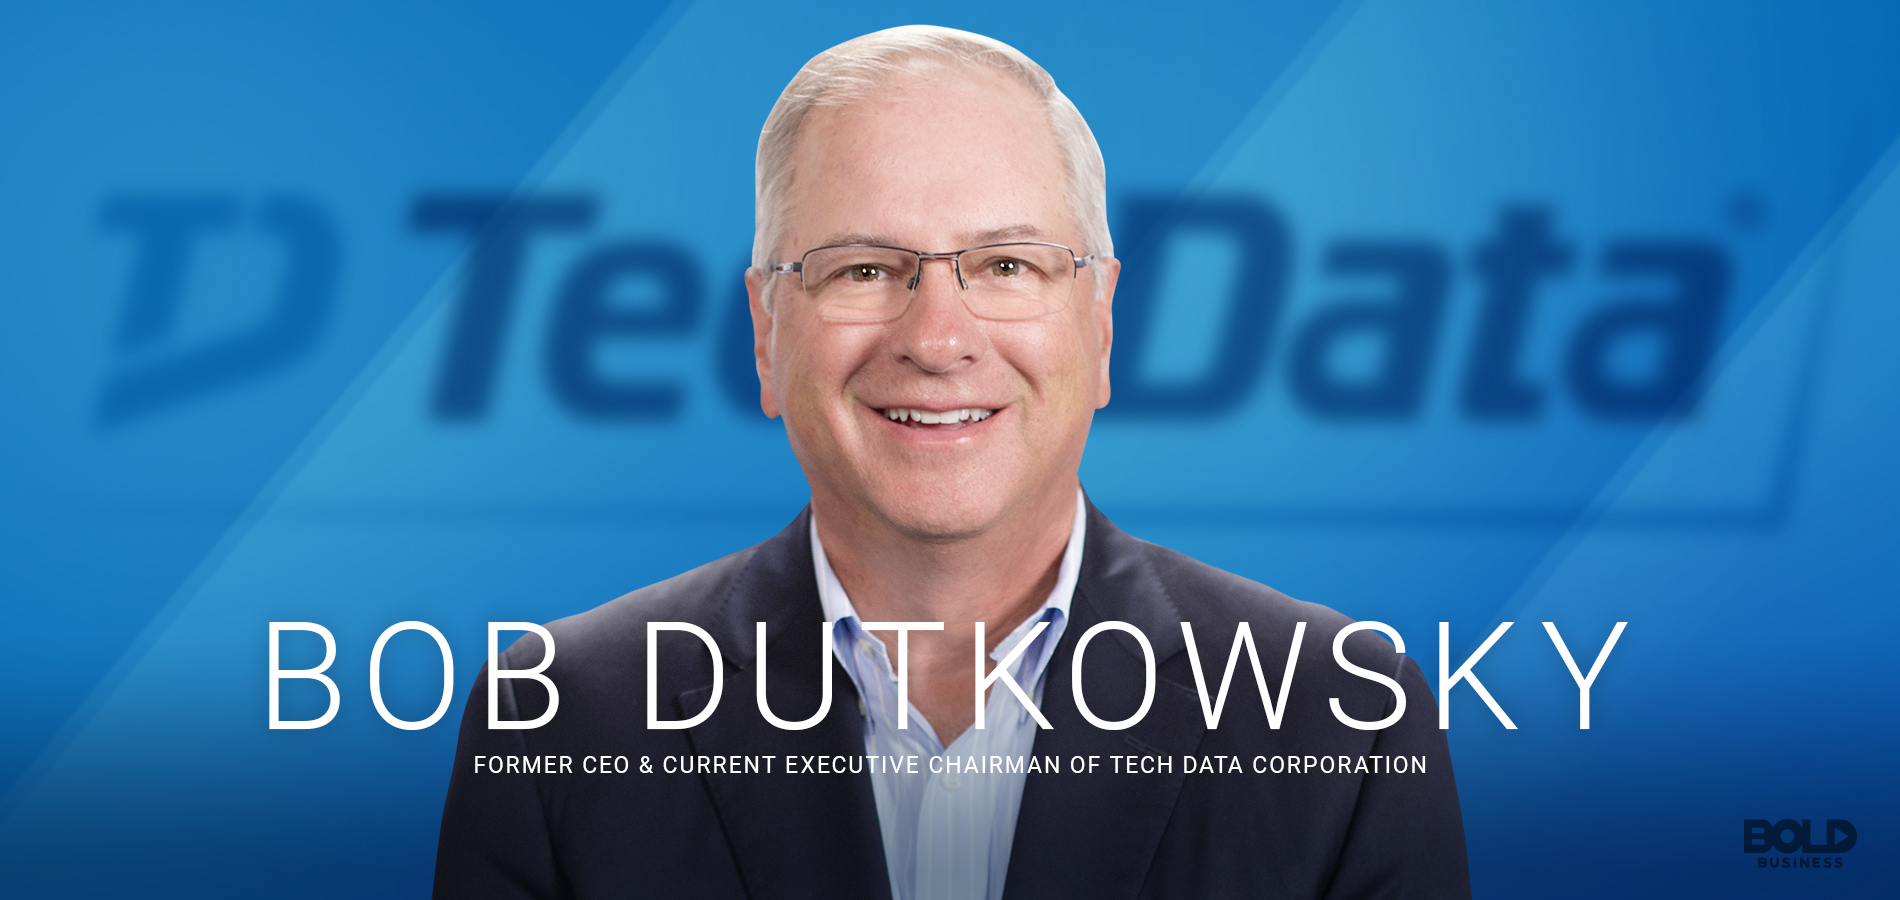 Bob Dutkowsky is a bold leader.